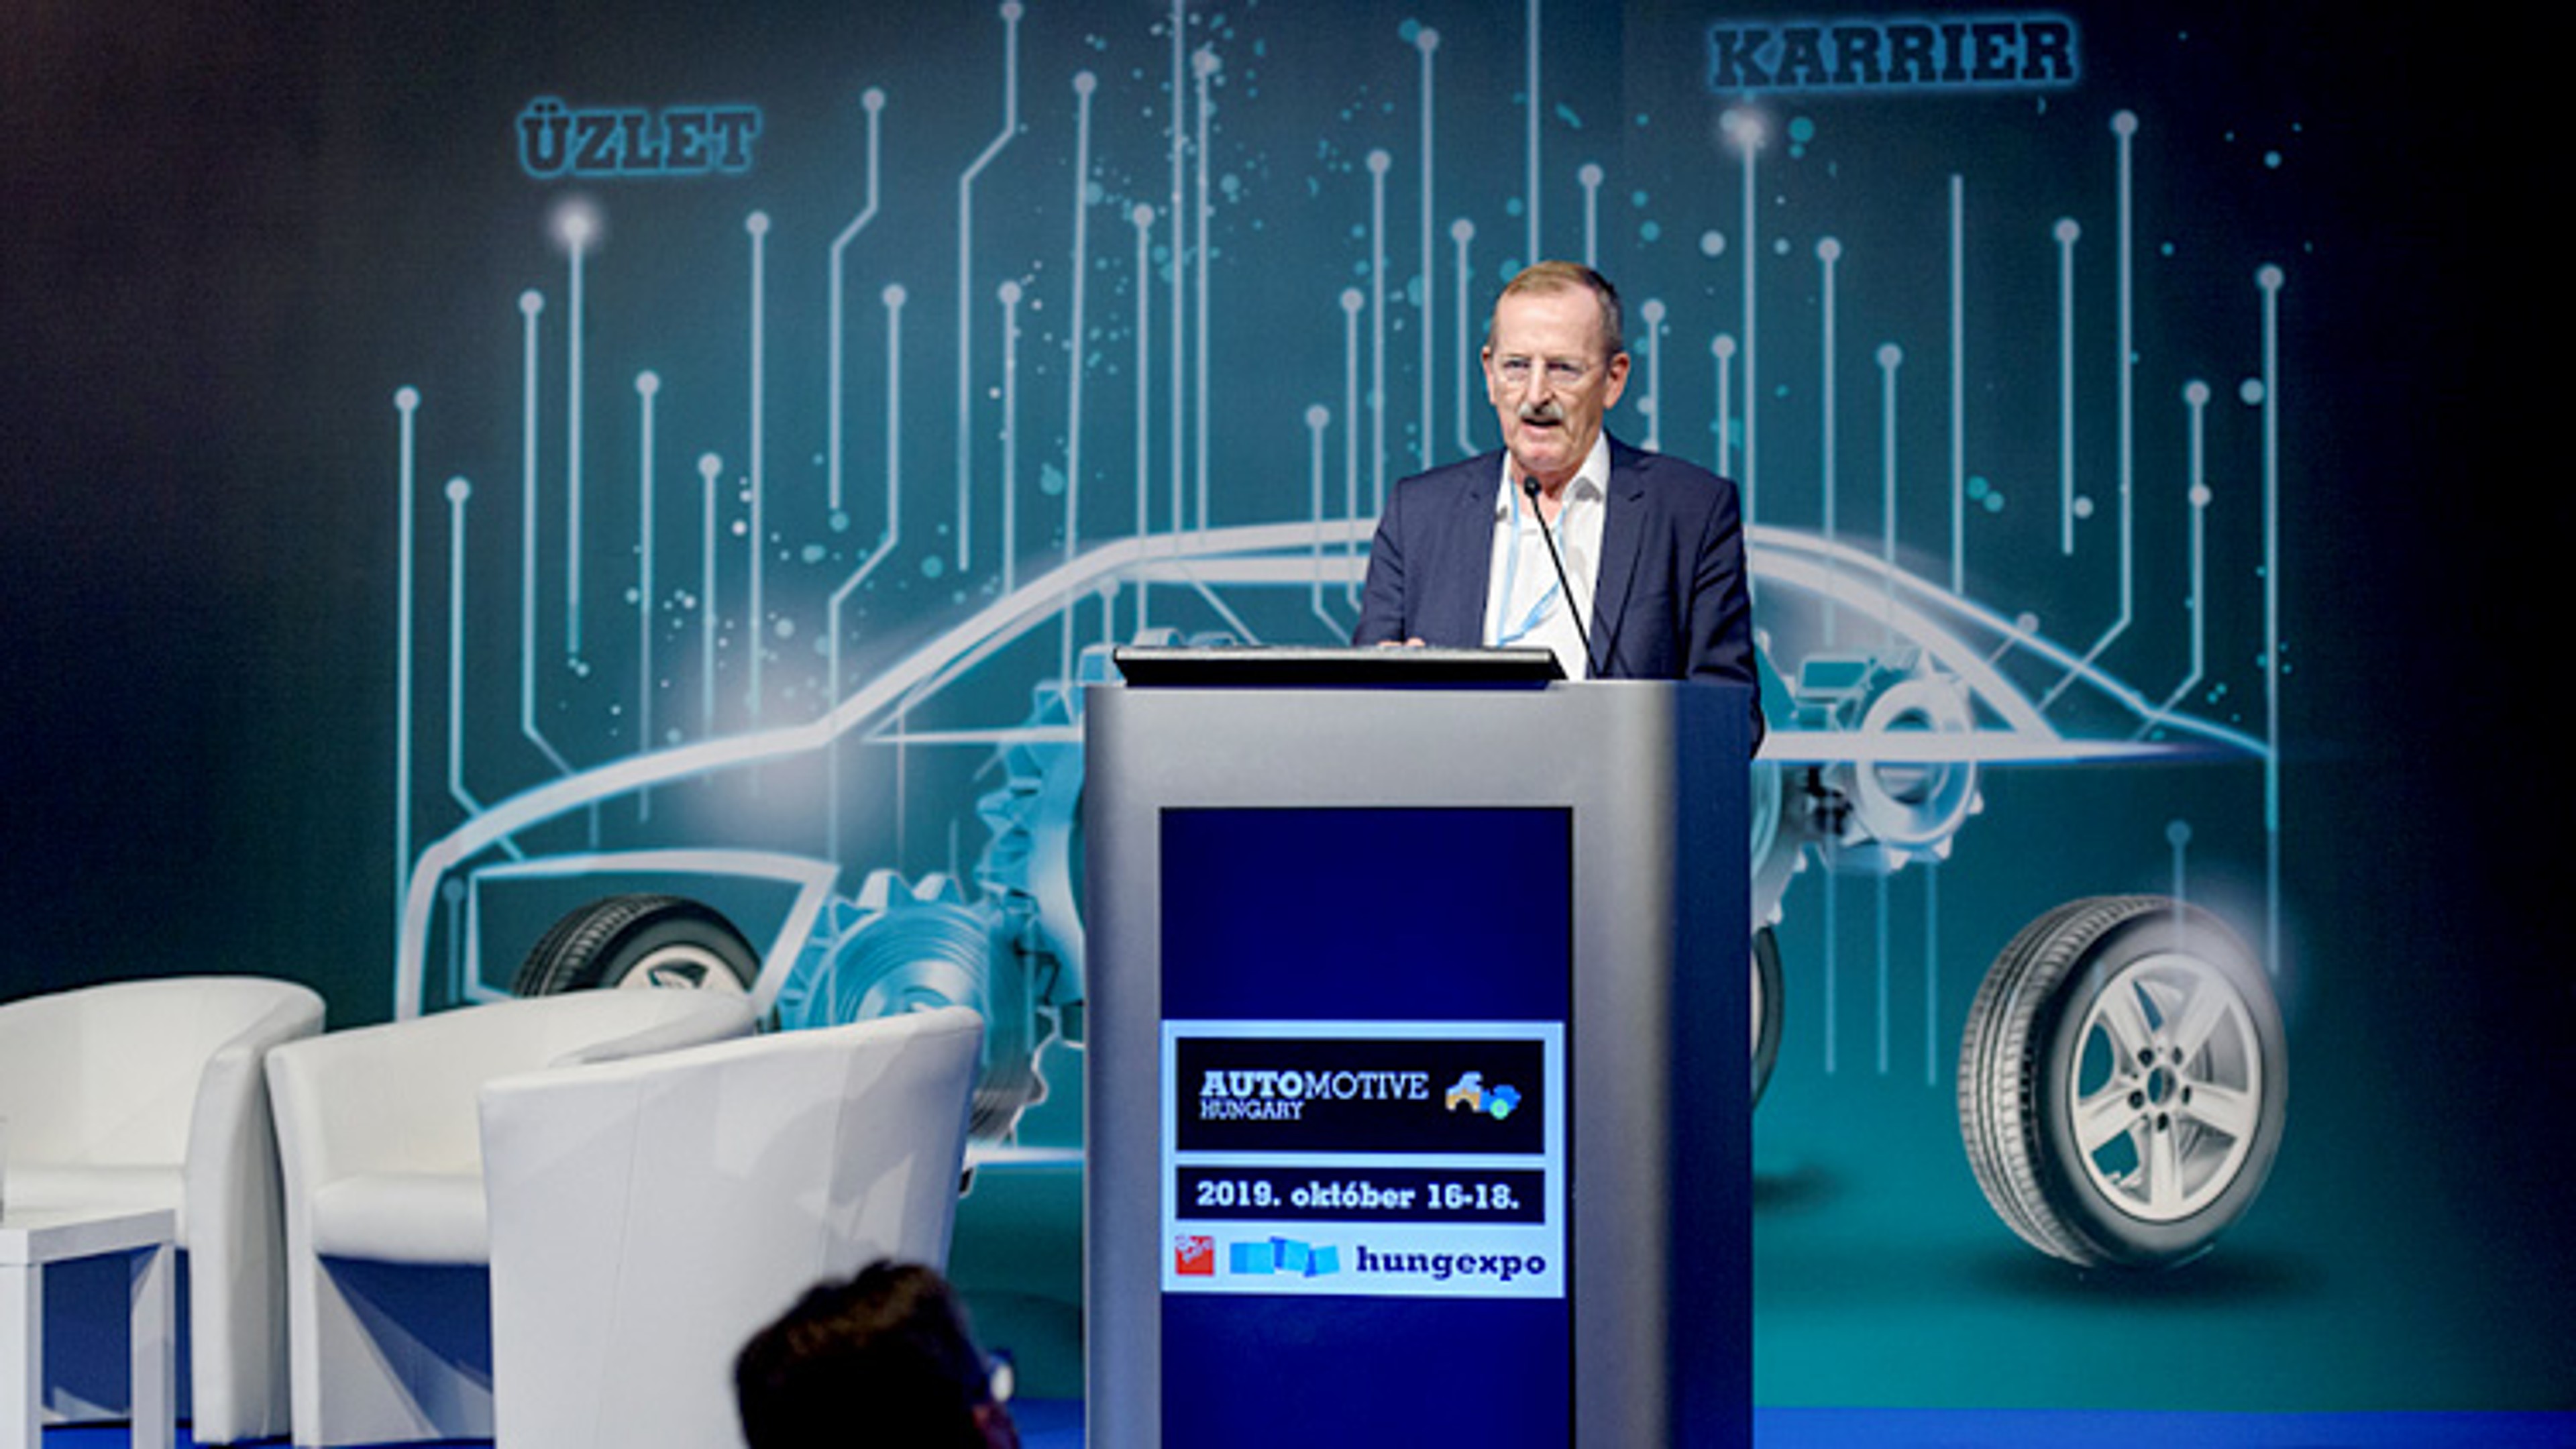 Günther Schulze先生在匈牙利汽车博览会发表讲话